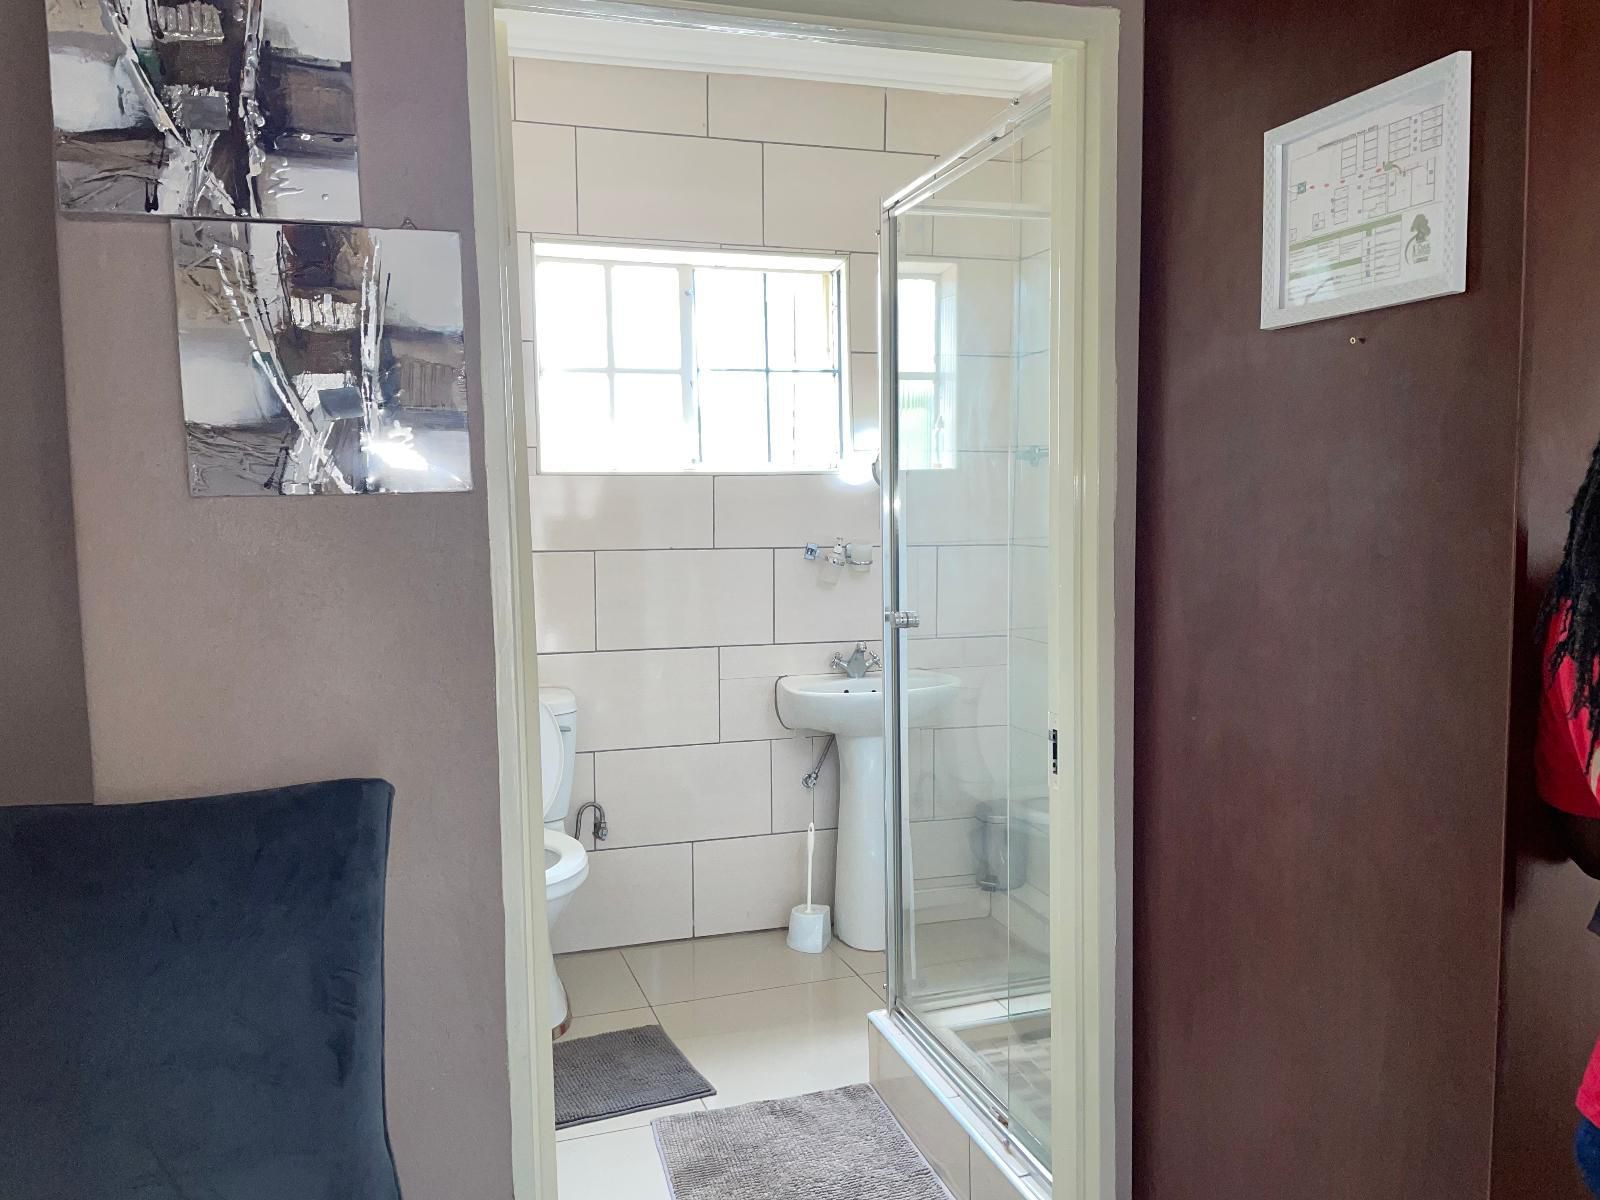 1 Oak Lodge Thohoyandou Limpopo Province South Africa Door, Architecture, Bathroom